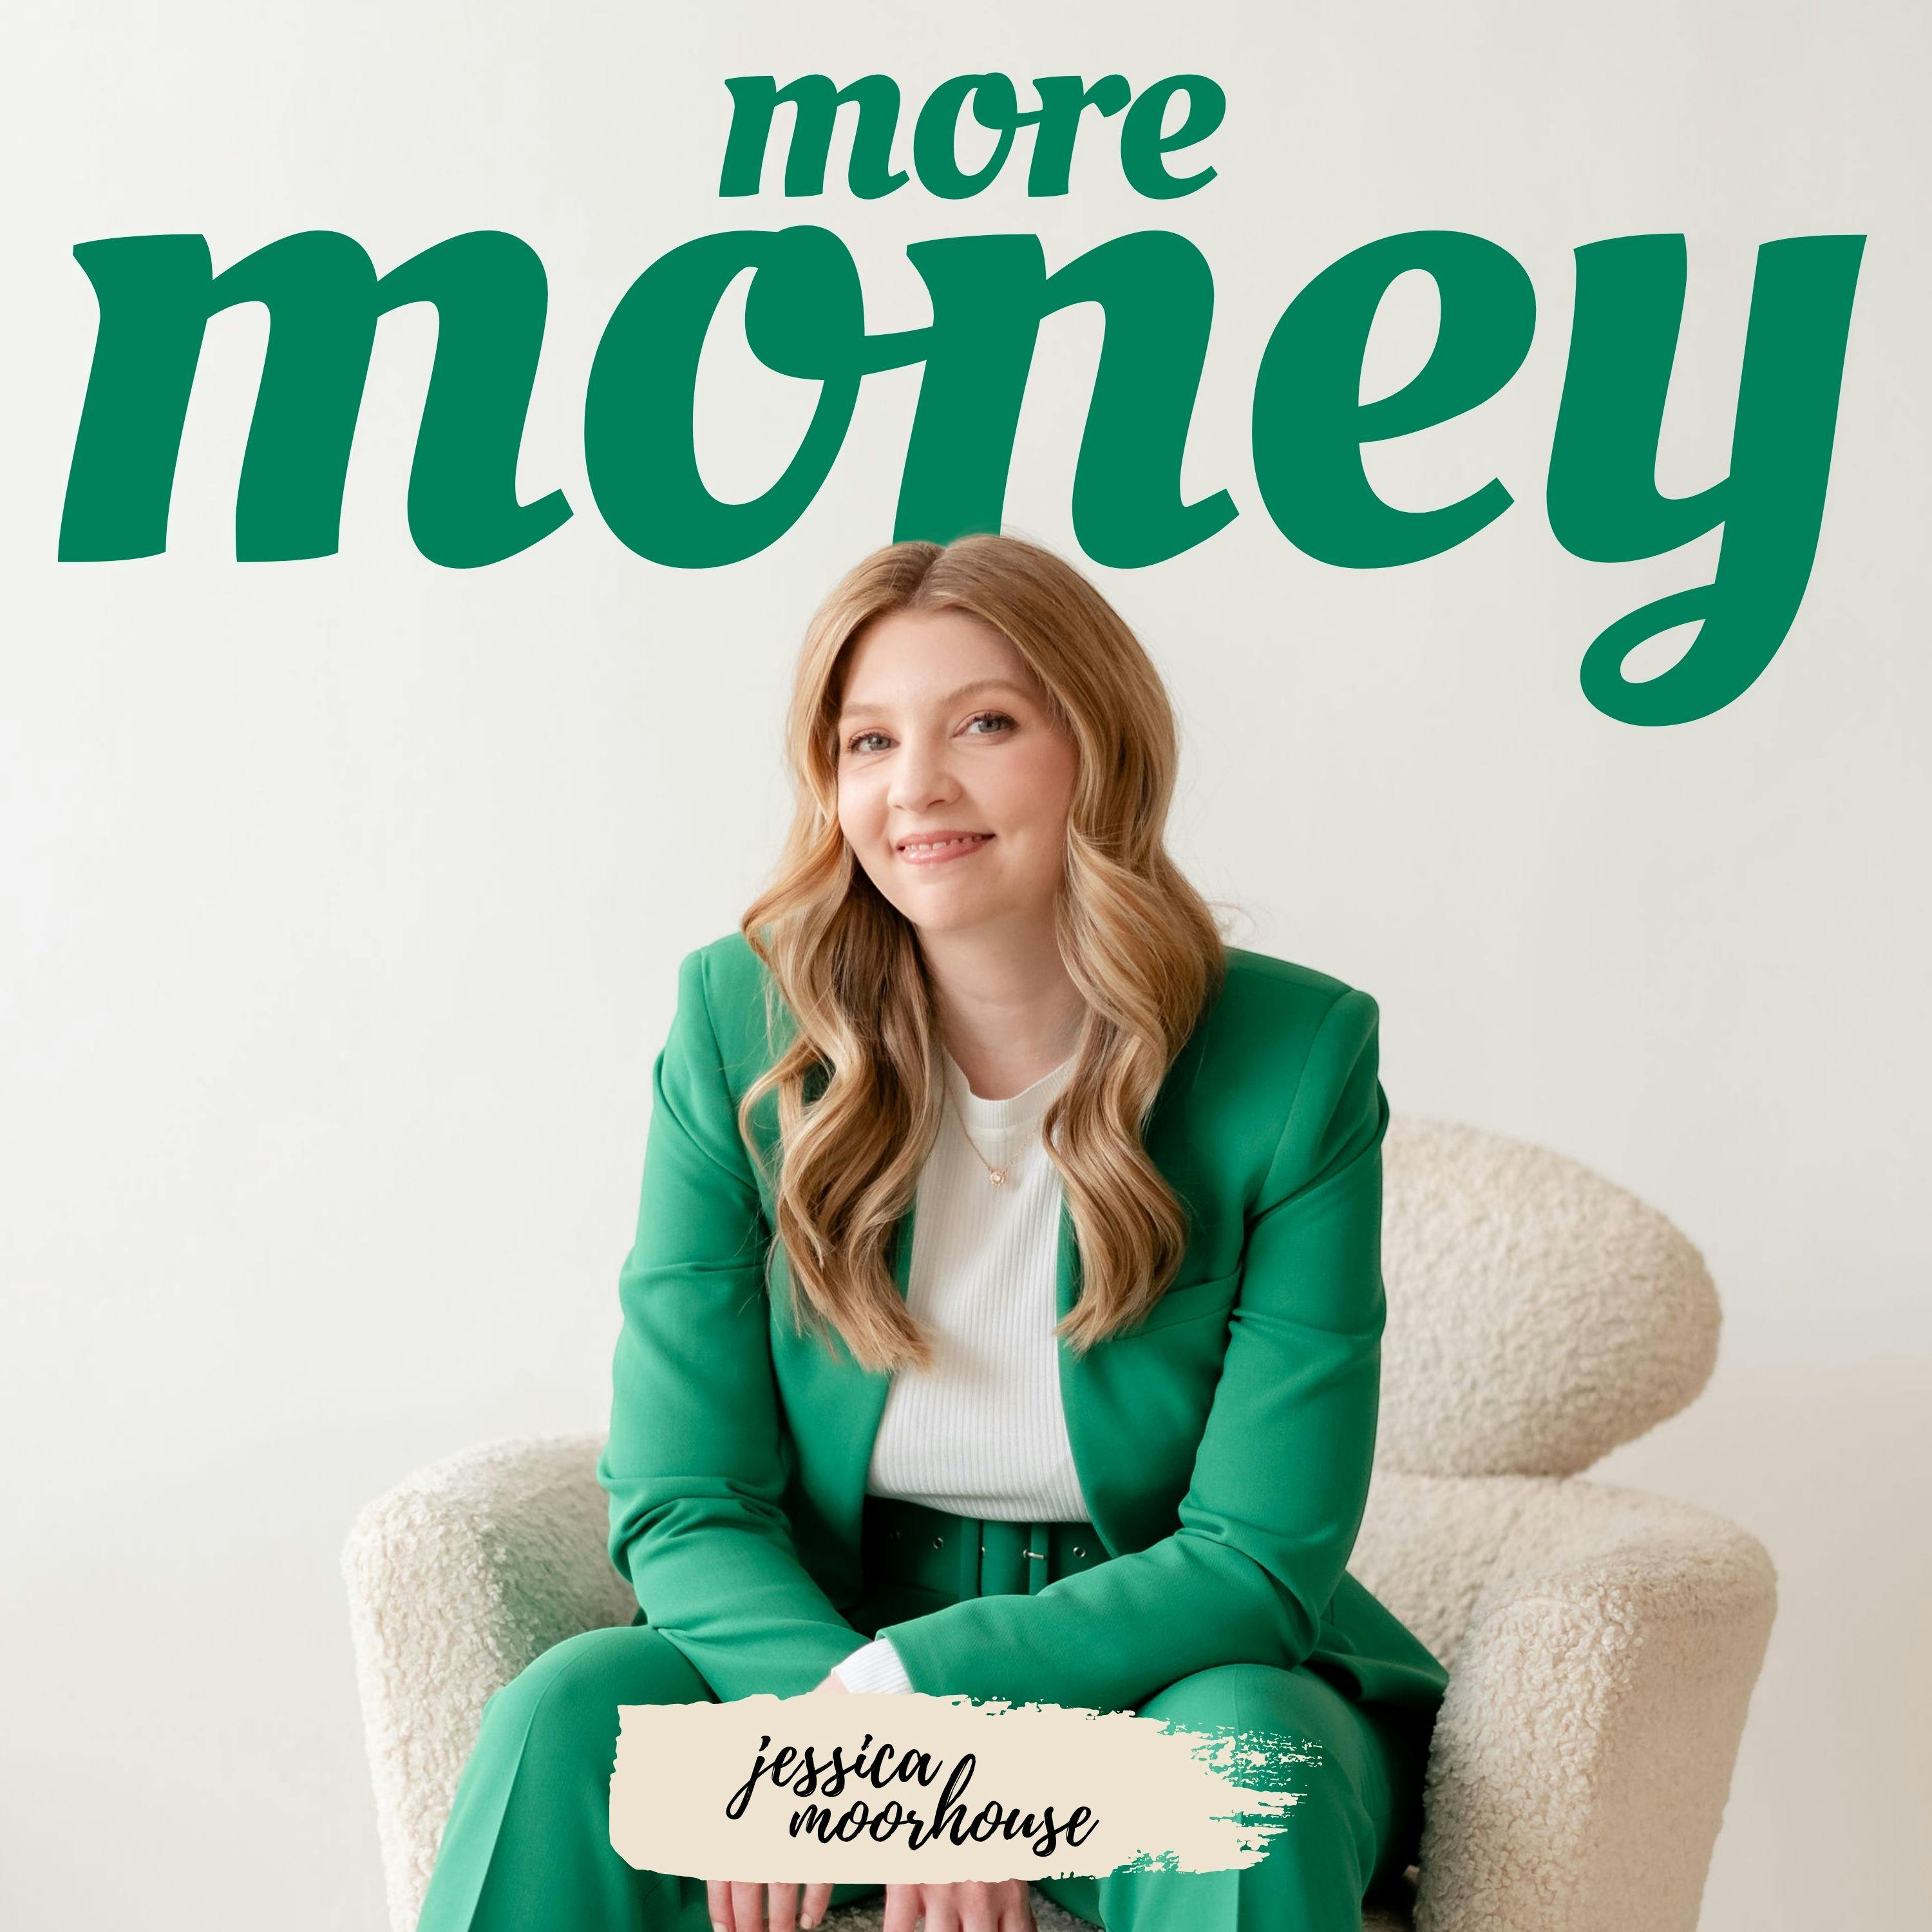 191 Women, Money & Financial Success - Robin Taub, CPA, Speaker & Author